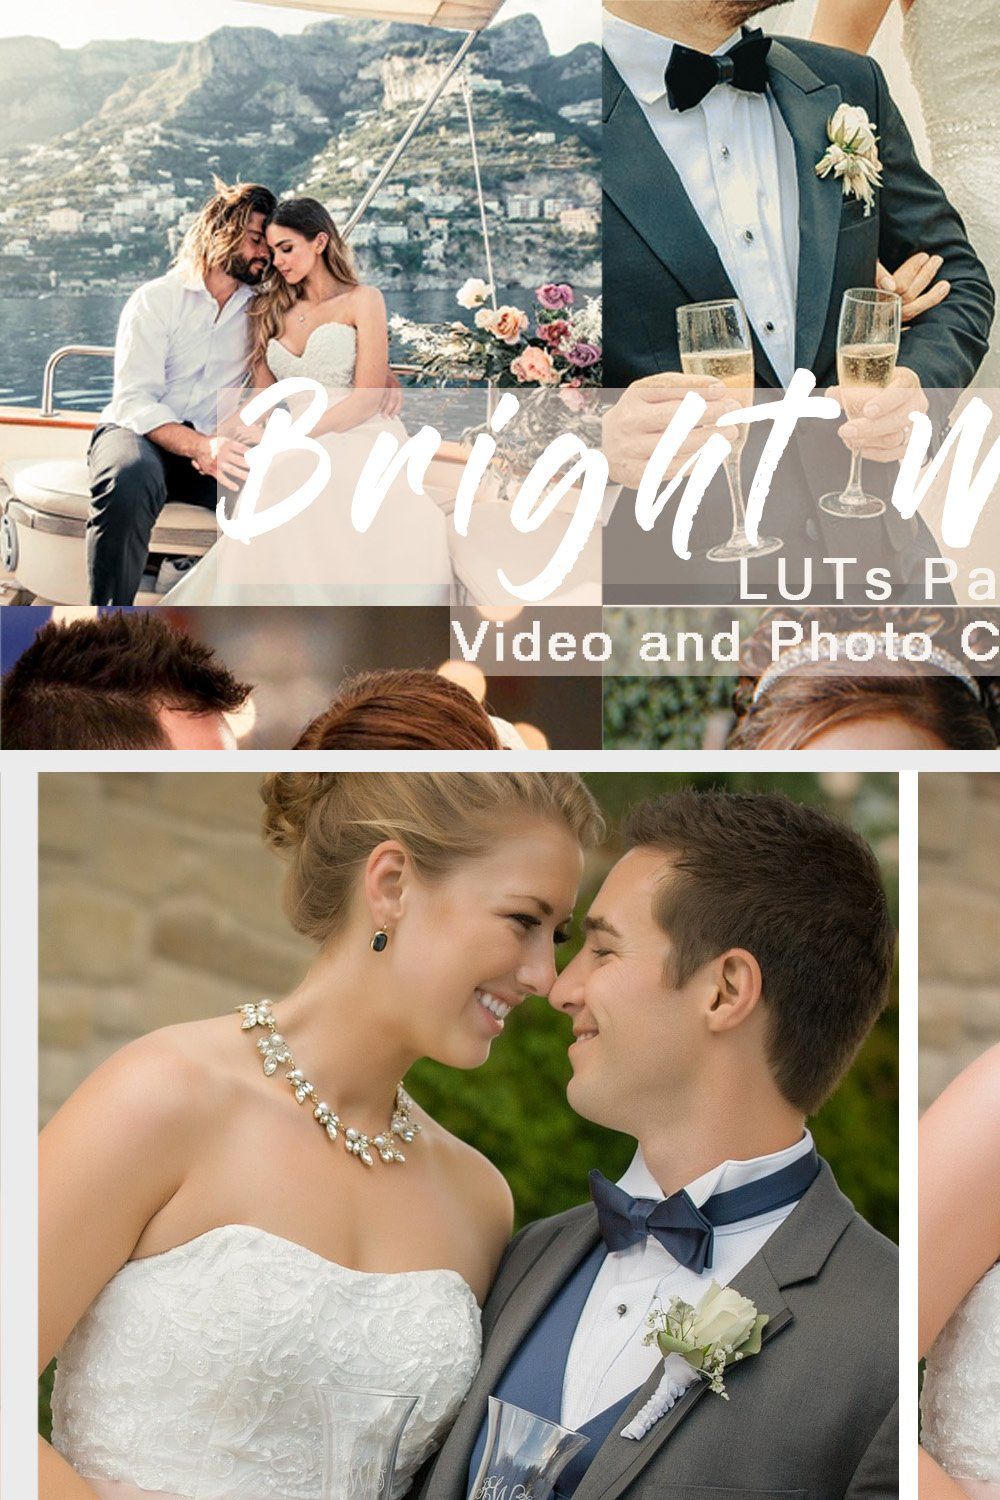 BRIGHT WEDDING - LUTs Bundle pinterest preview image.